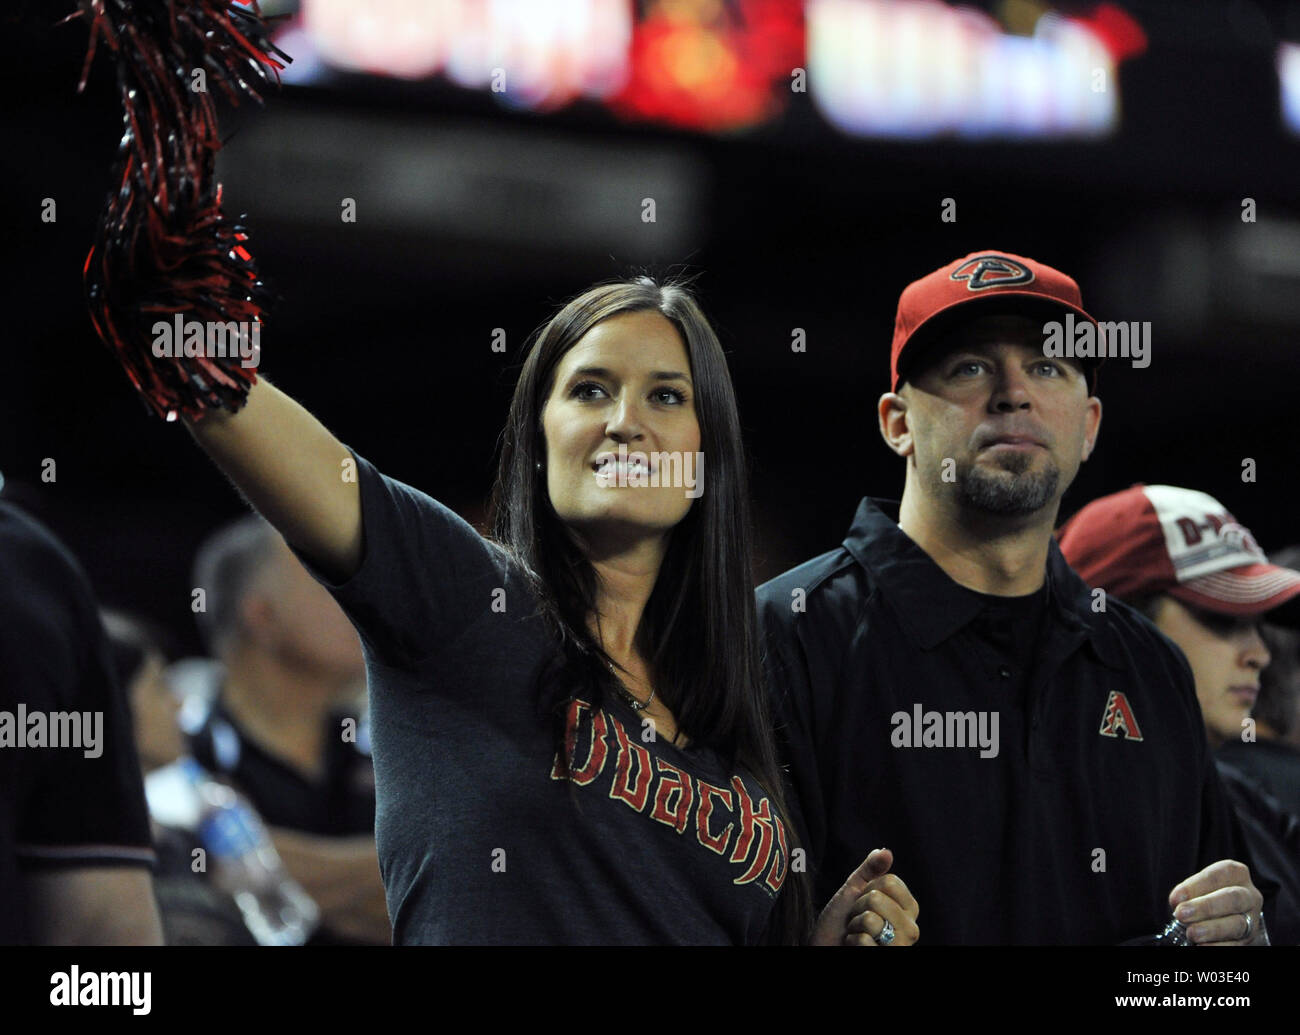 Arizona Diamondbacks Fans High Resolution Stock Photography and Images -  Alamy